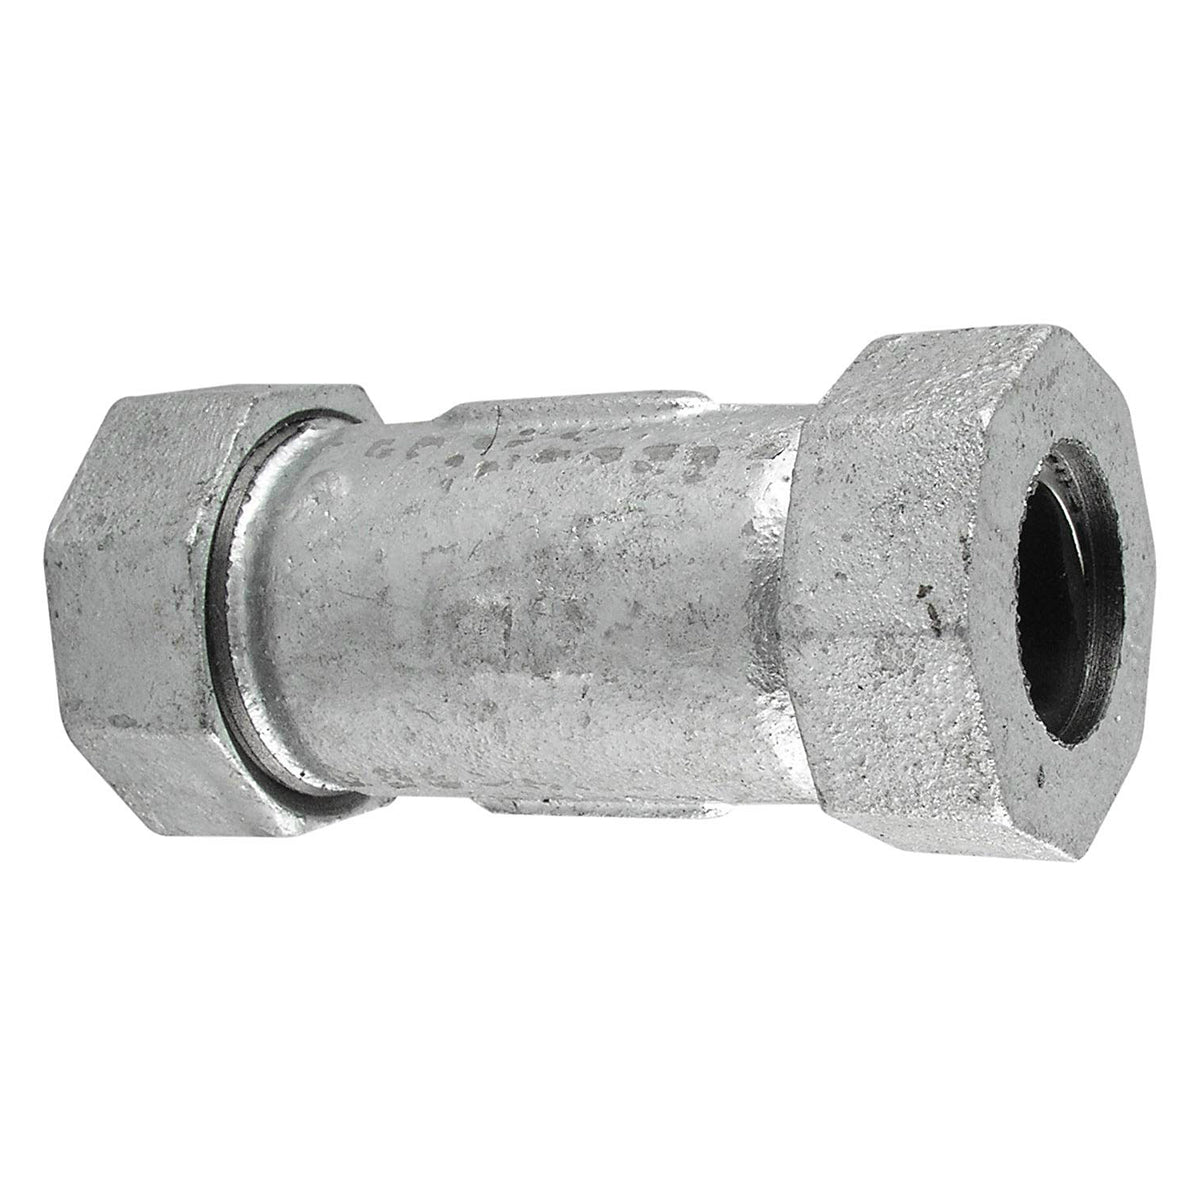 B&K 160-004HP Galvanized Pipe Repair Compression Coupling, 3/4"